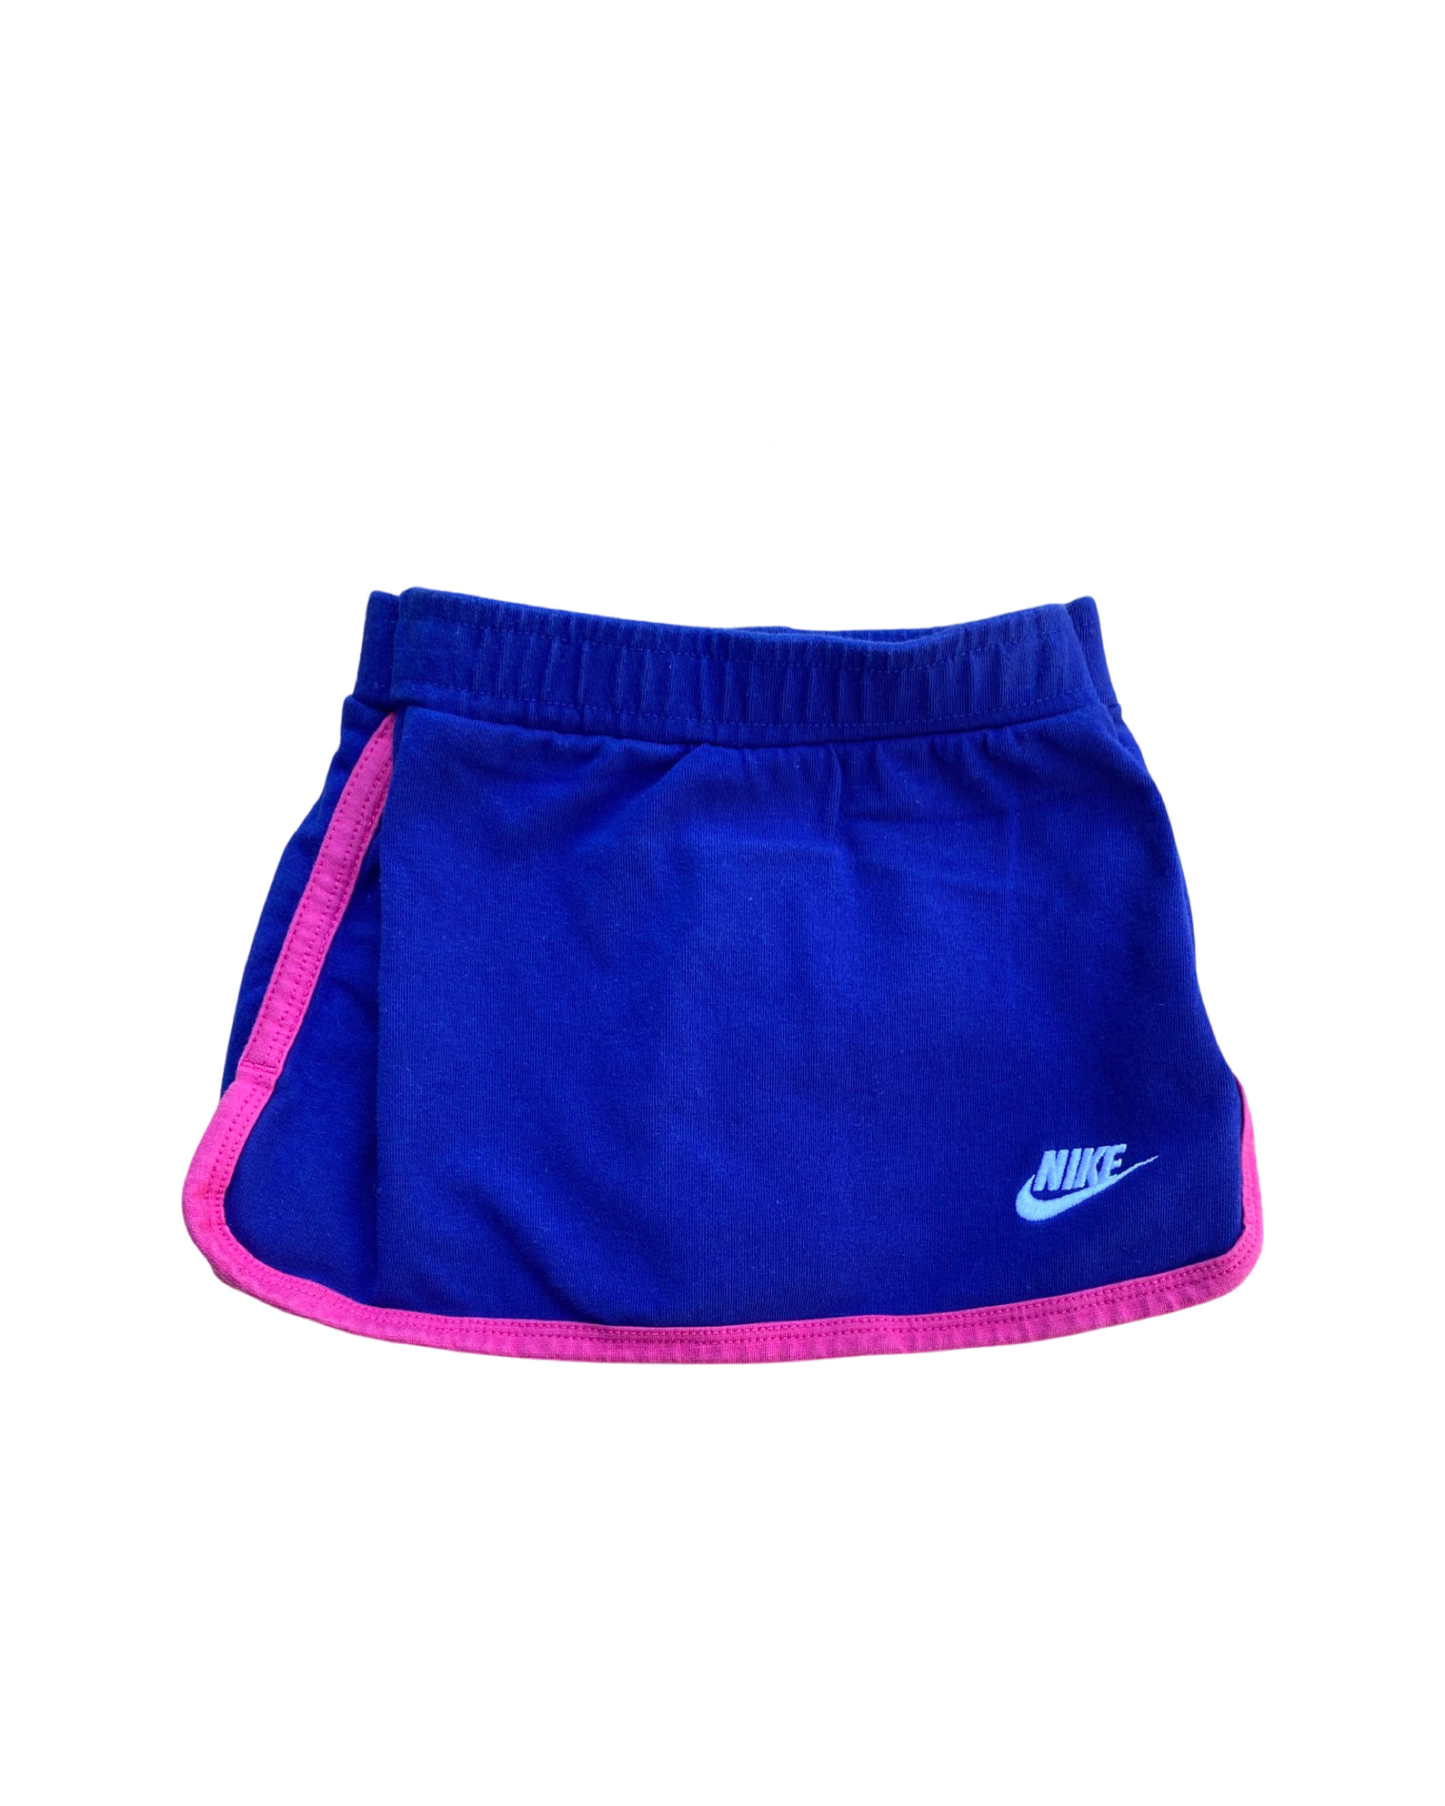 Nike electric blue jersey cotton skorts (12-18mths)